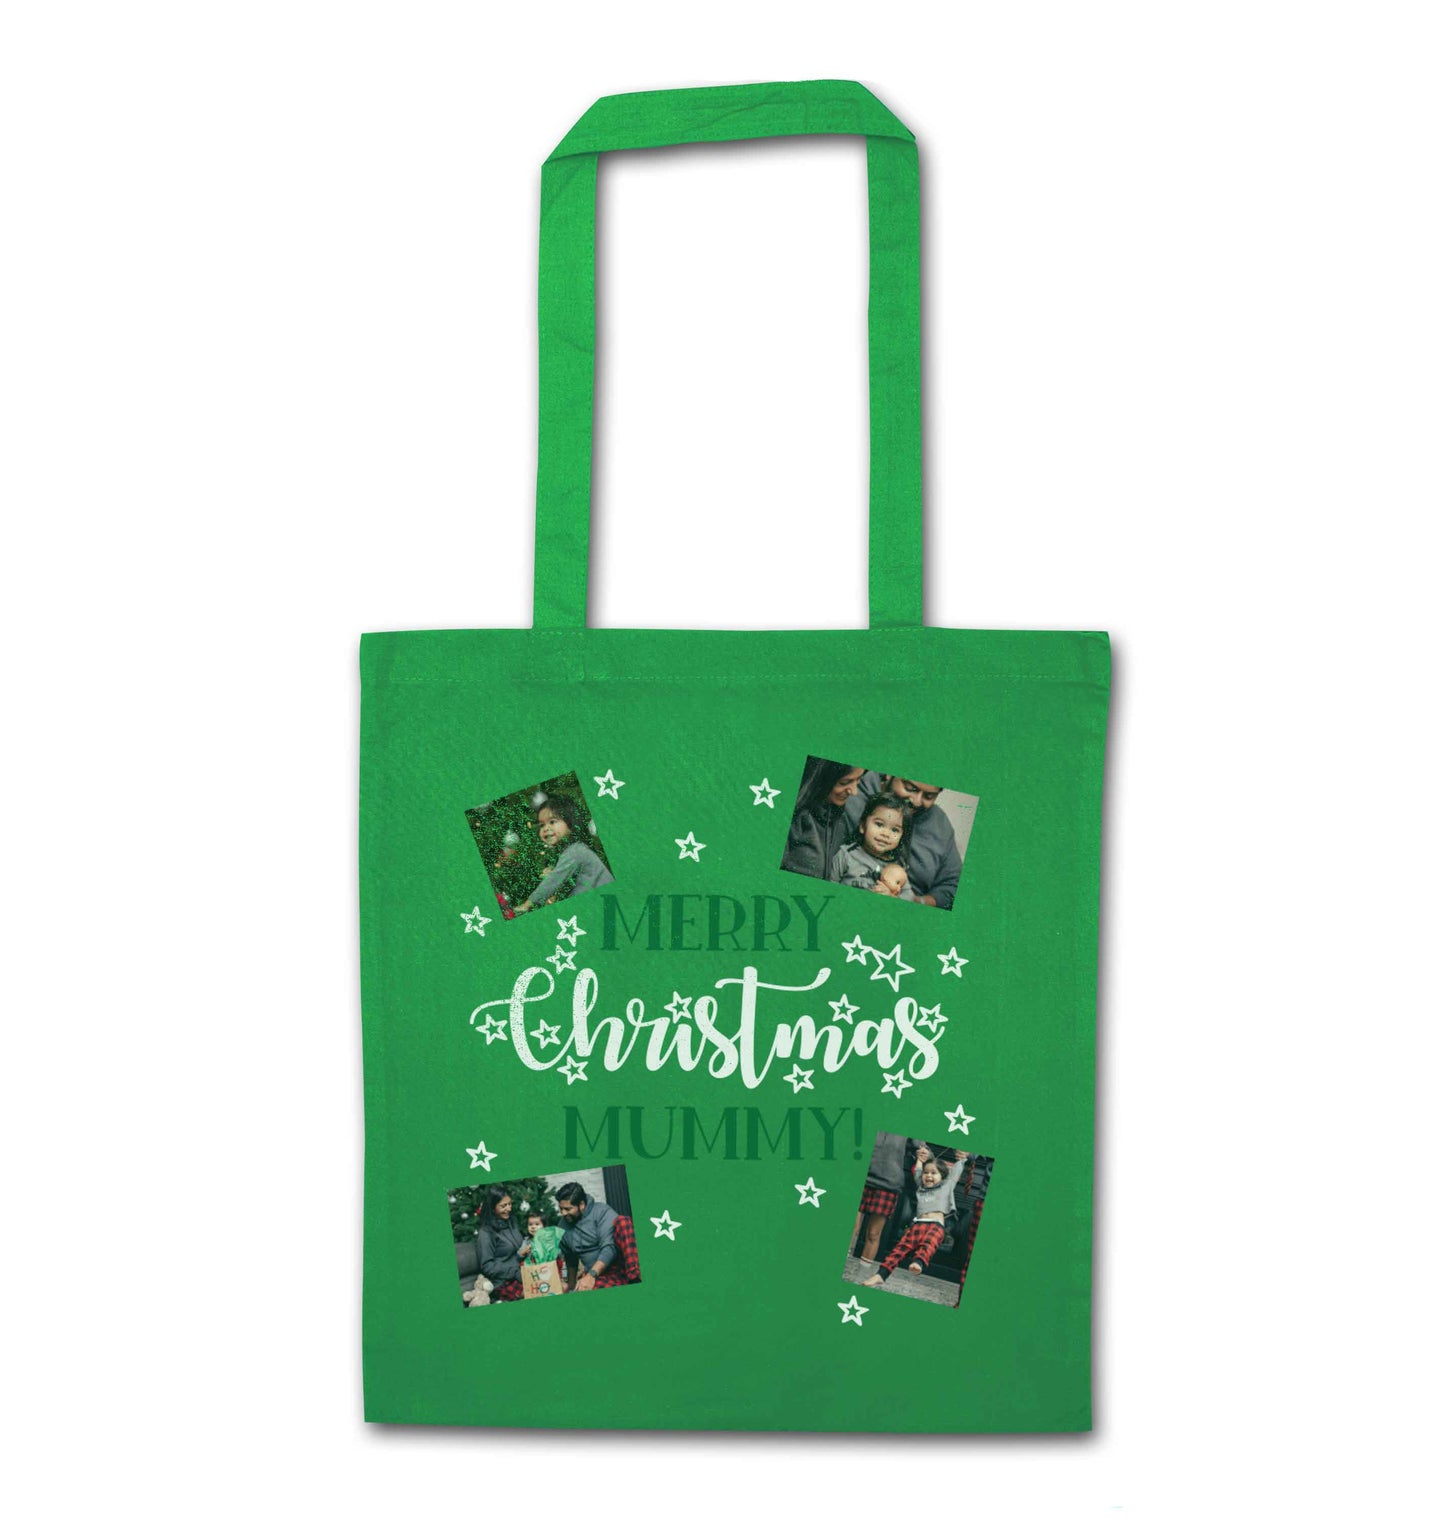 Merry Christmas Mummy green tote bag